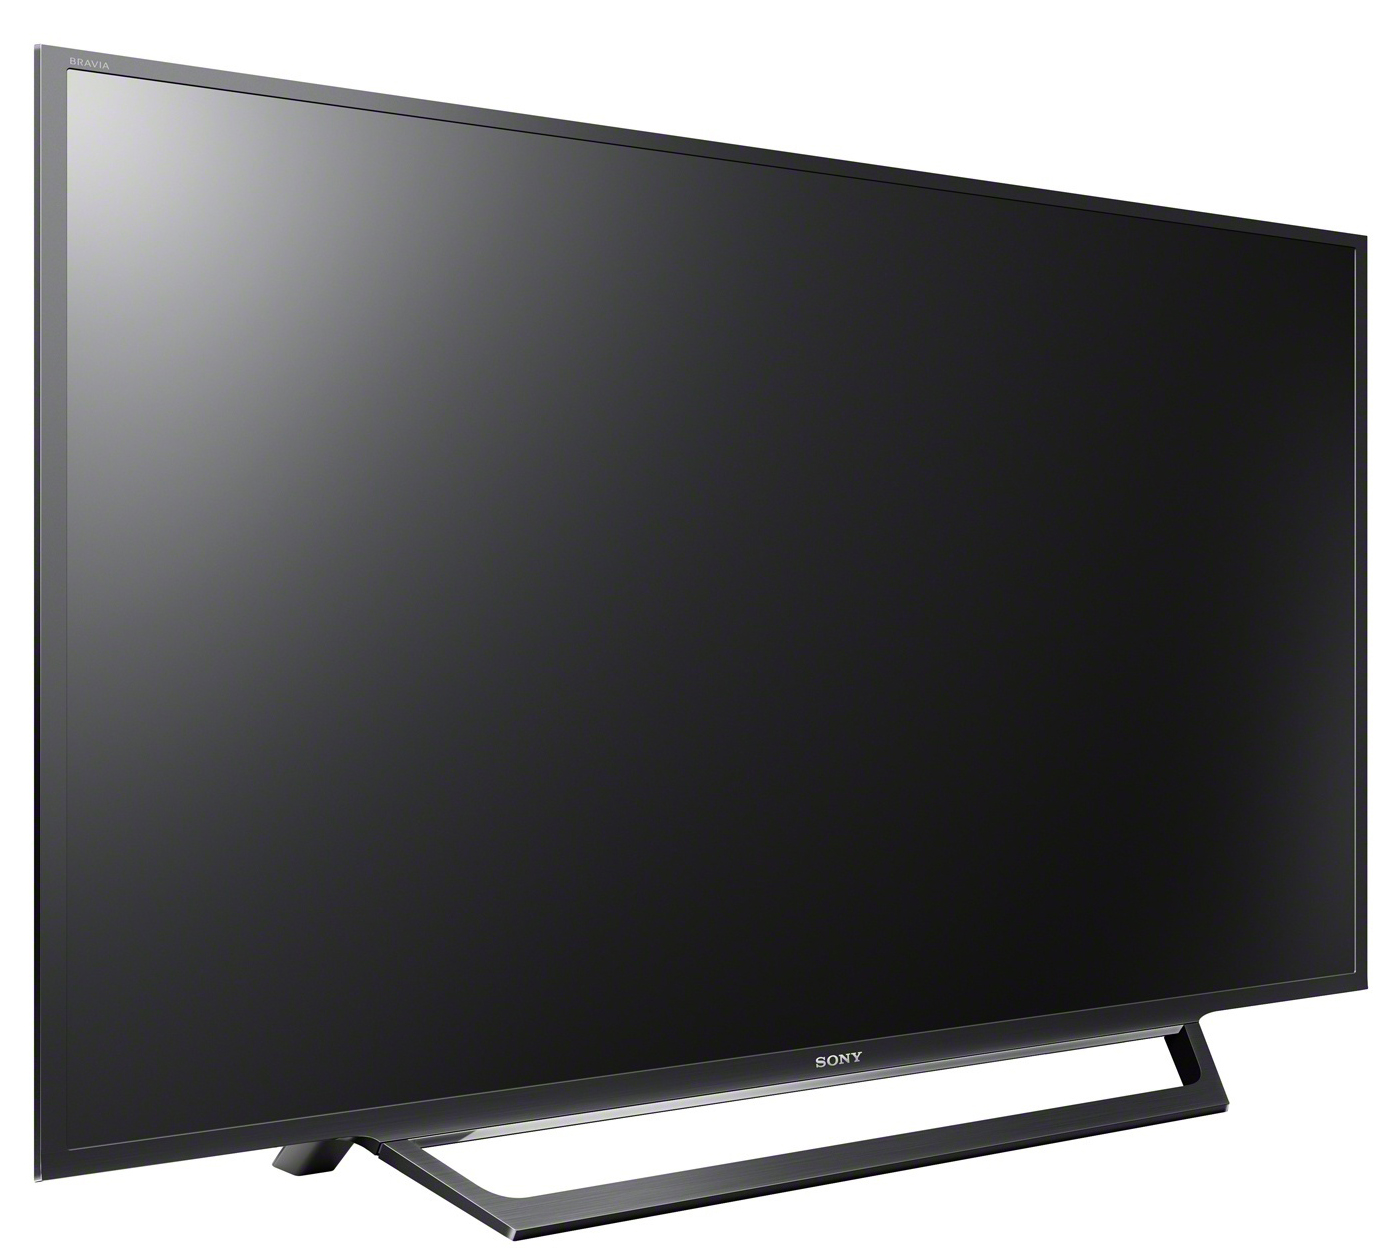 LED телевизор HD Ready Sony KDL-32WD603